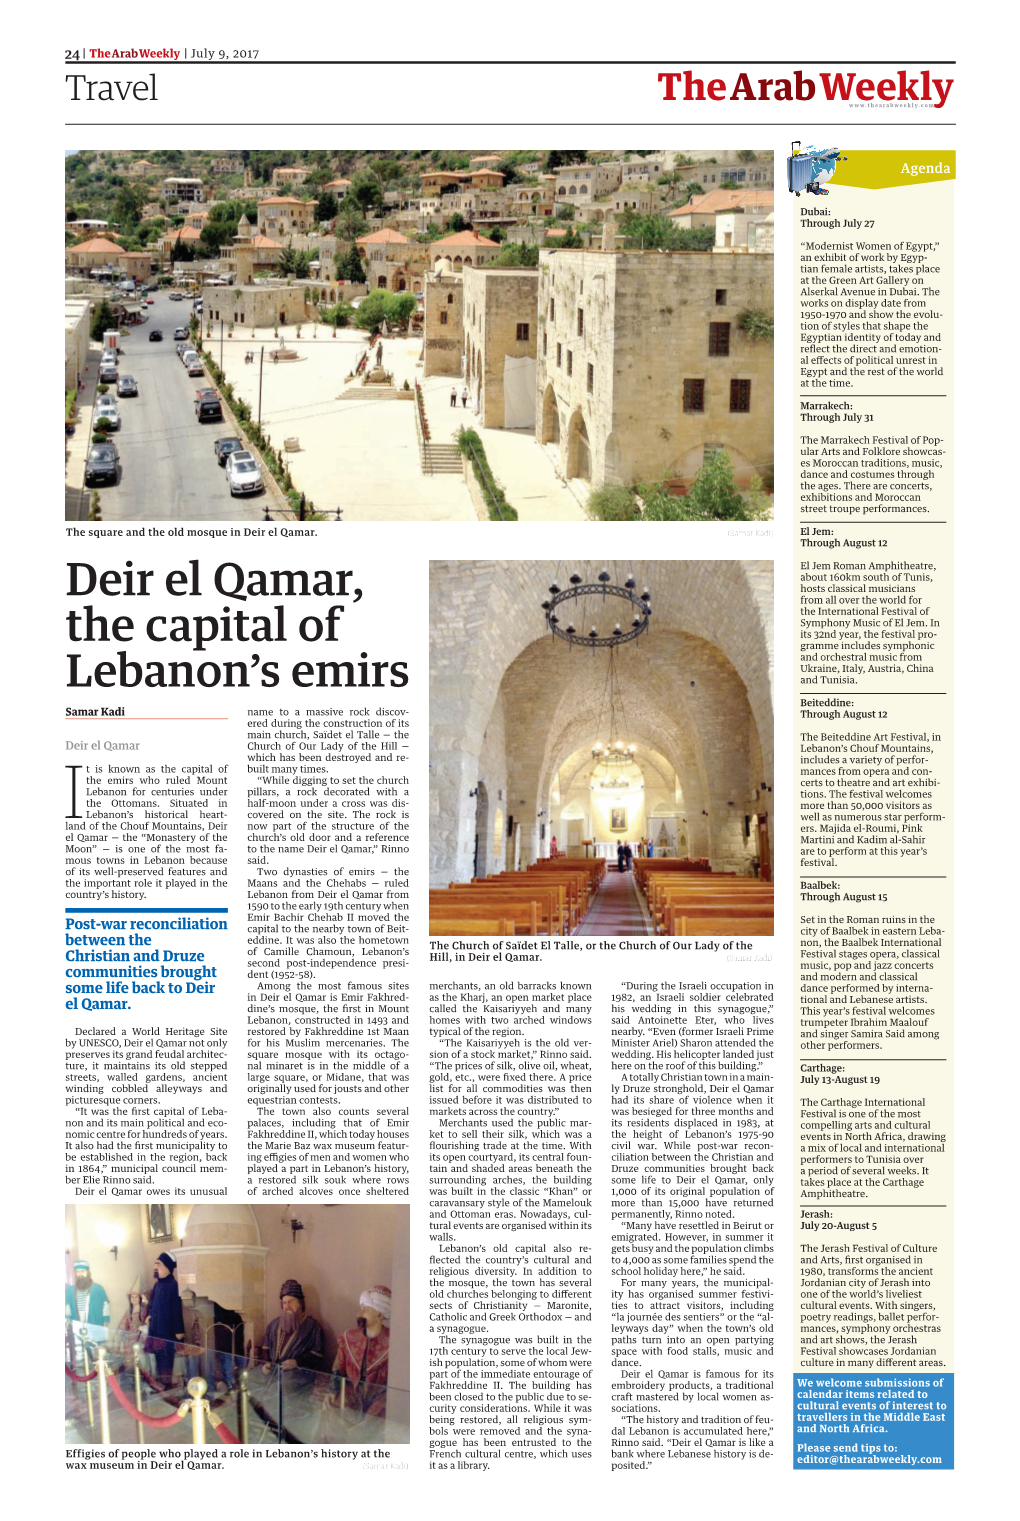 Deir El Qamar, the Capital of Lebanon's Emirs